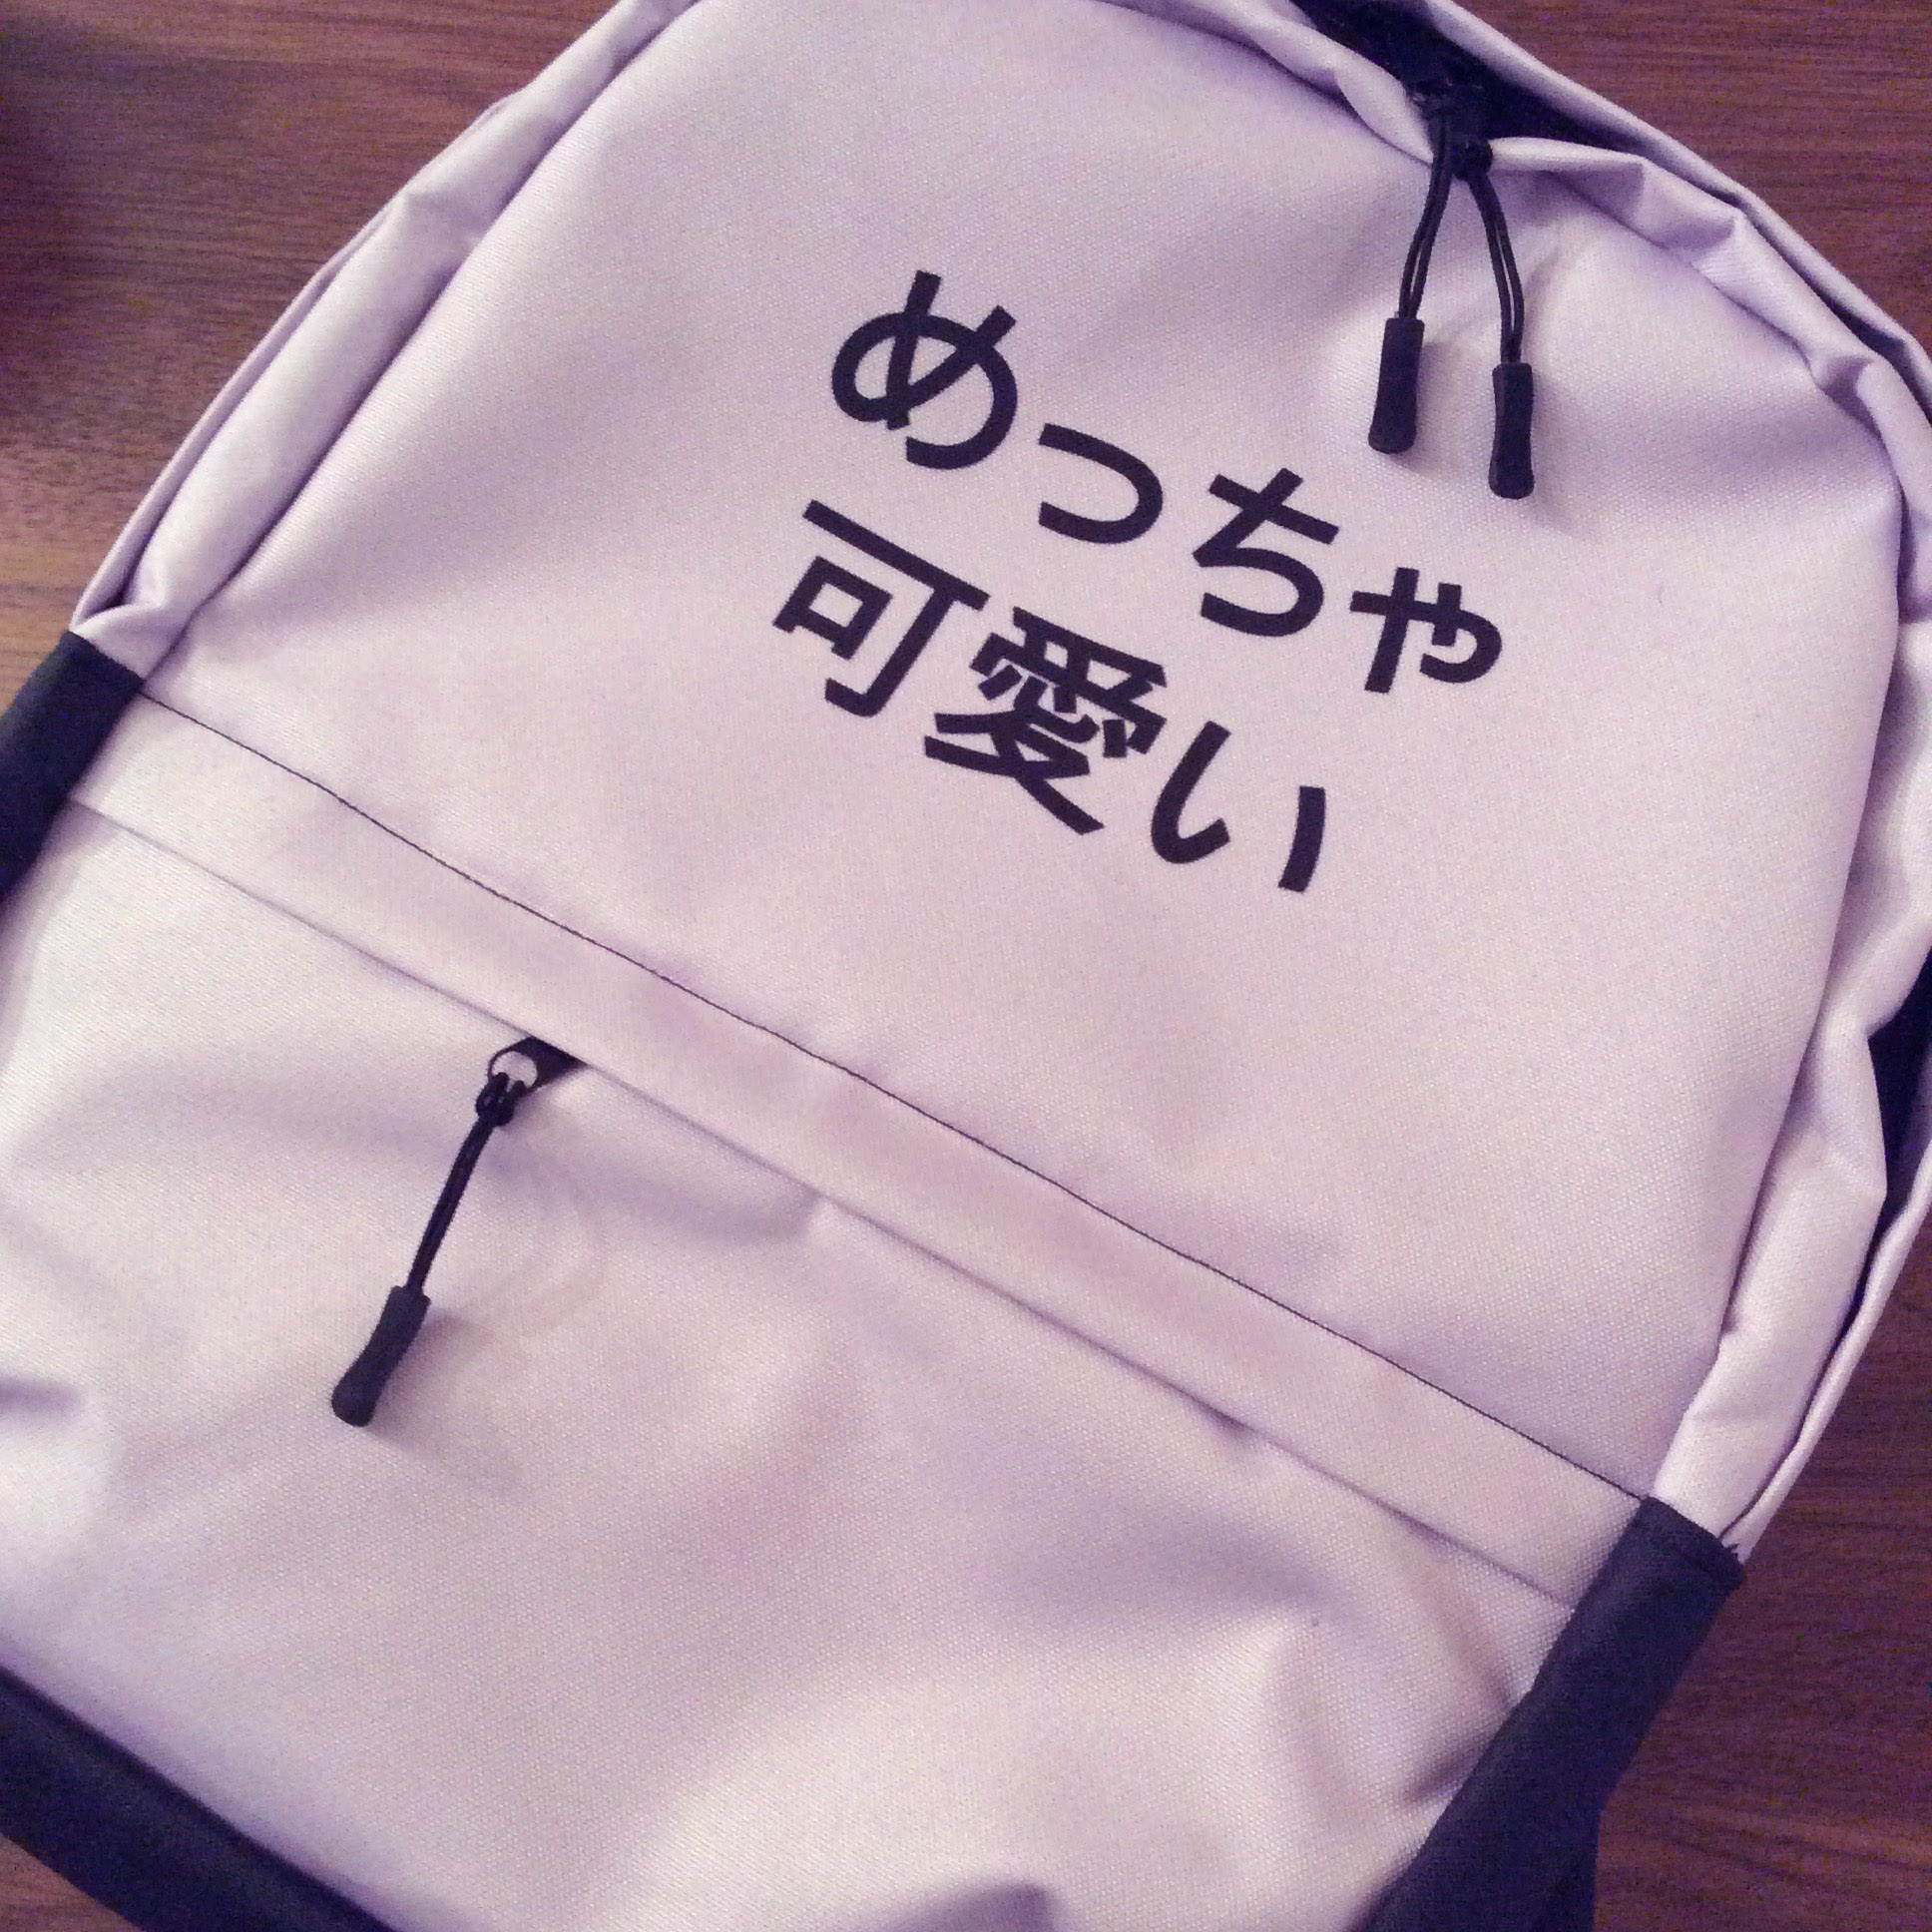 Meccha Kawaii Classic Backpack with Laptop Sleeve - Purple